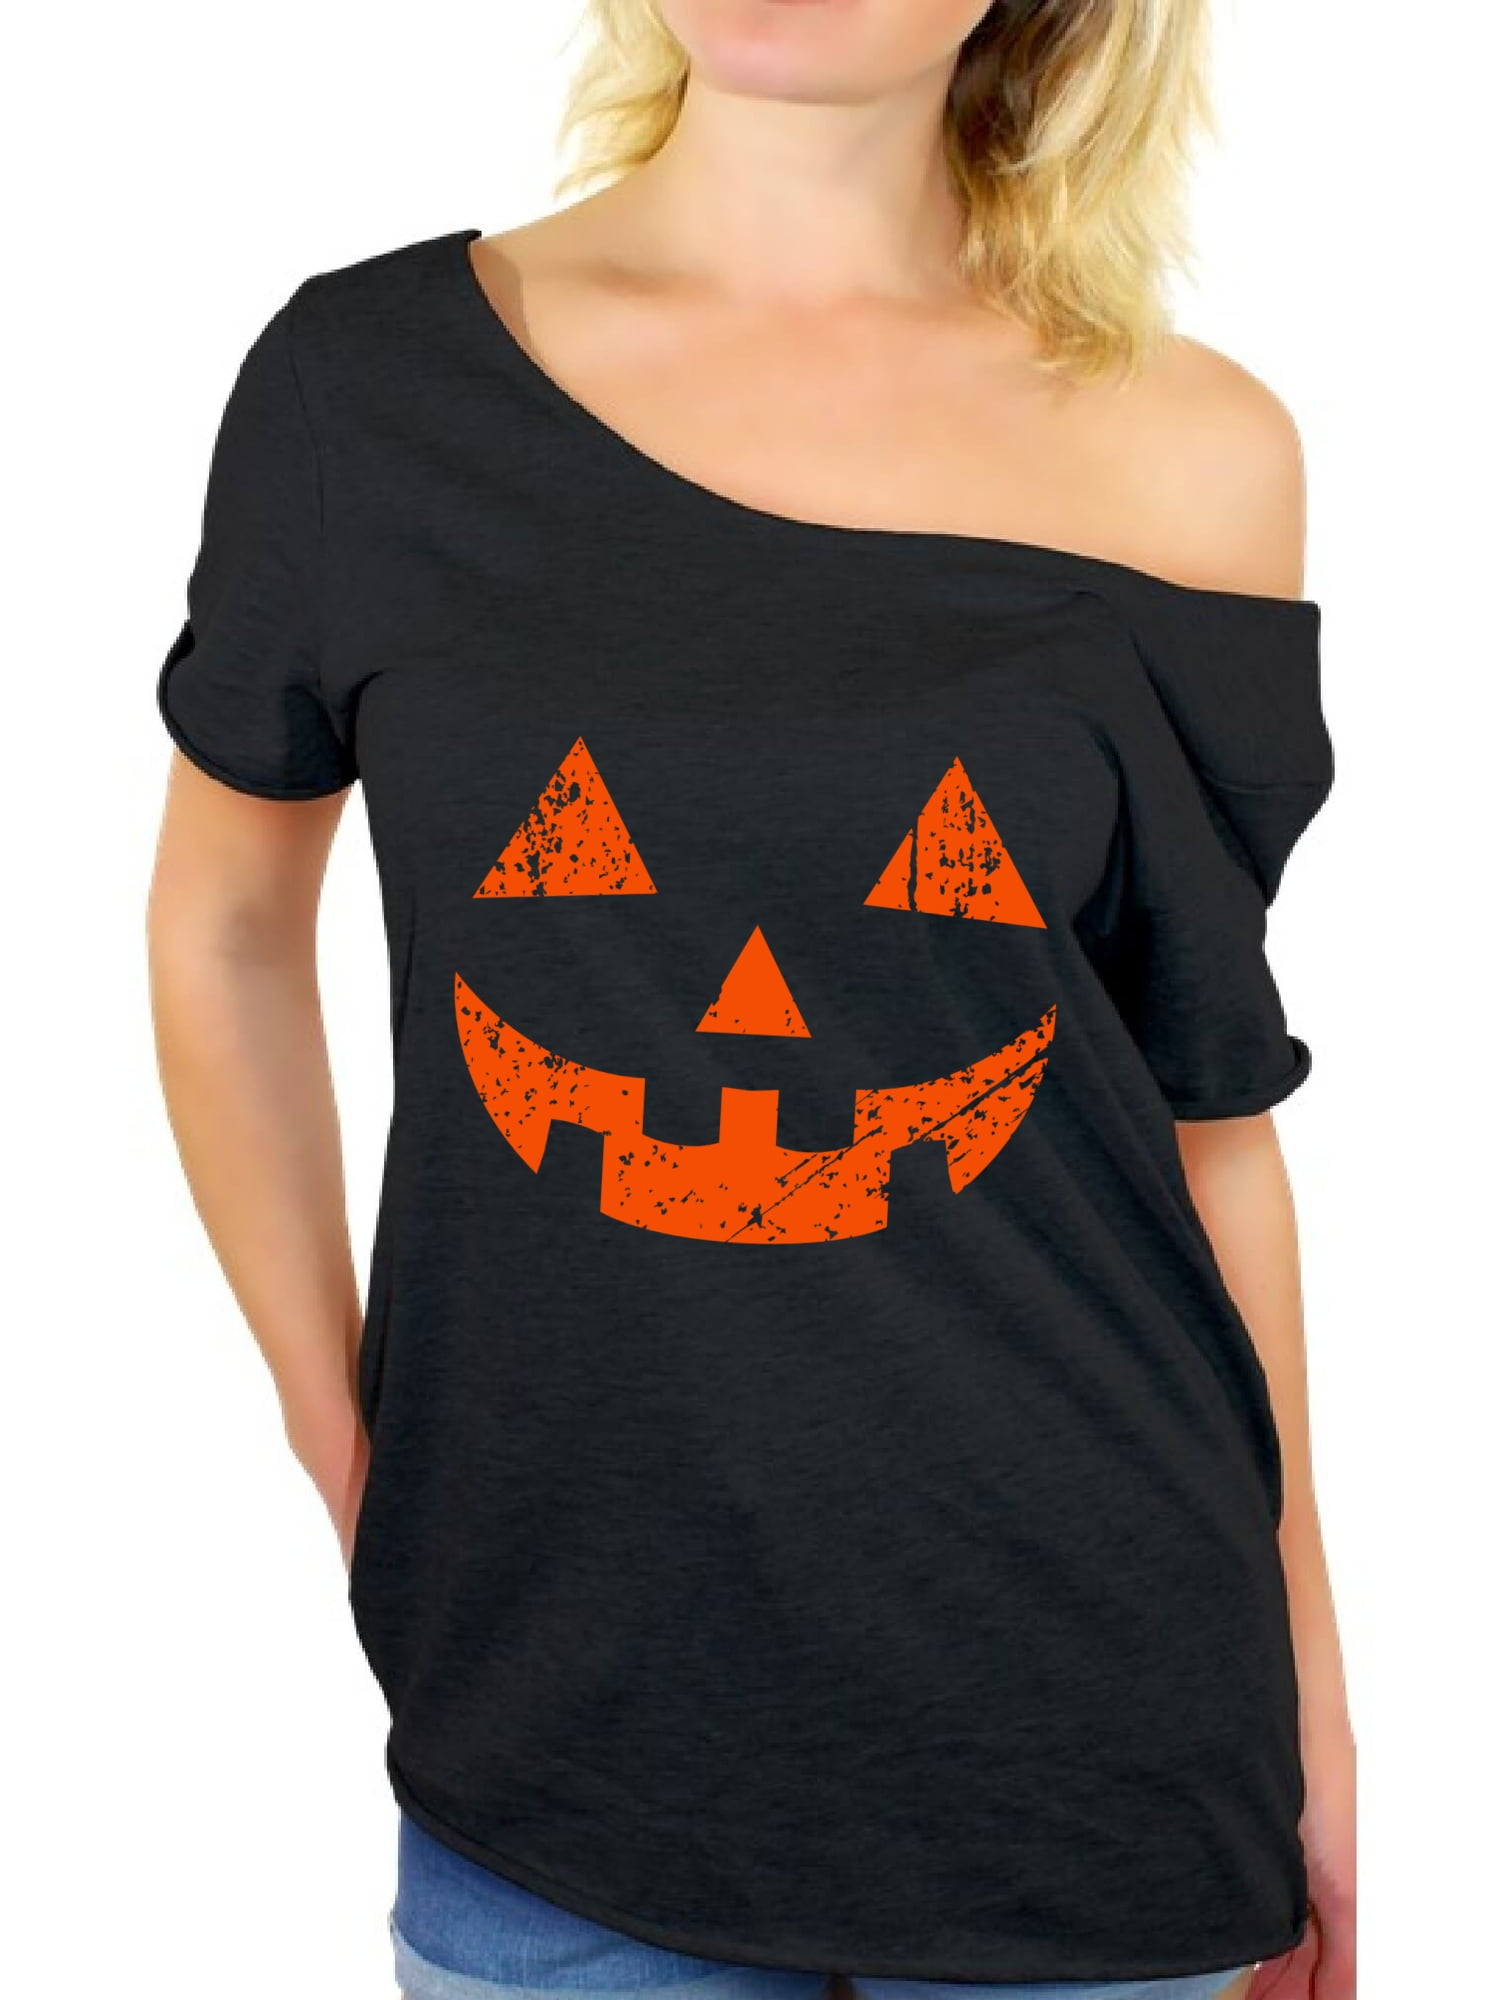 Skeleton Hands Shirt Halloween Shirt,Halloween Shirt for Woman,Funny Halloween Shirt,Hand Bra Shirt,Trick or Treat Shirt,Halloween Party